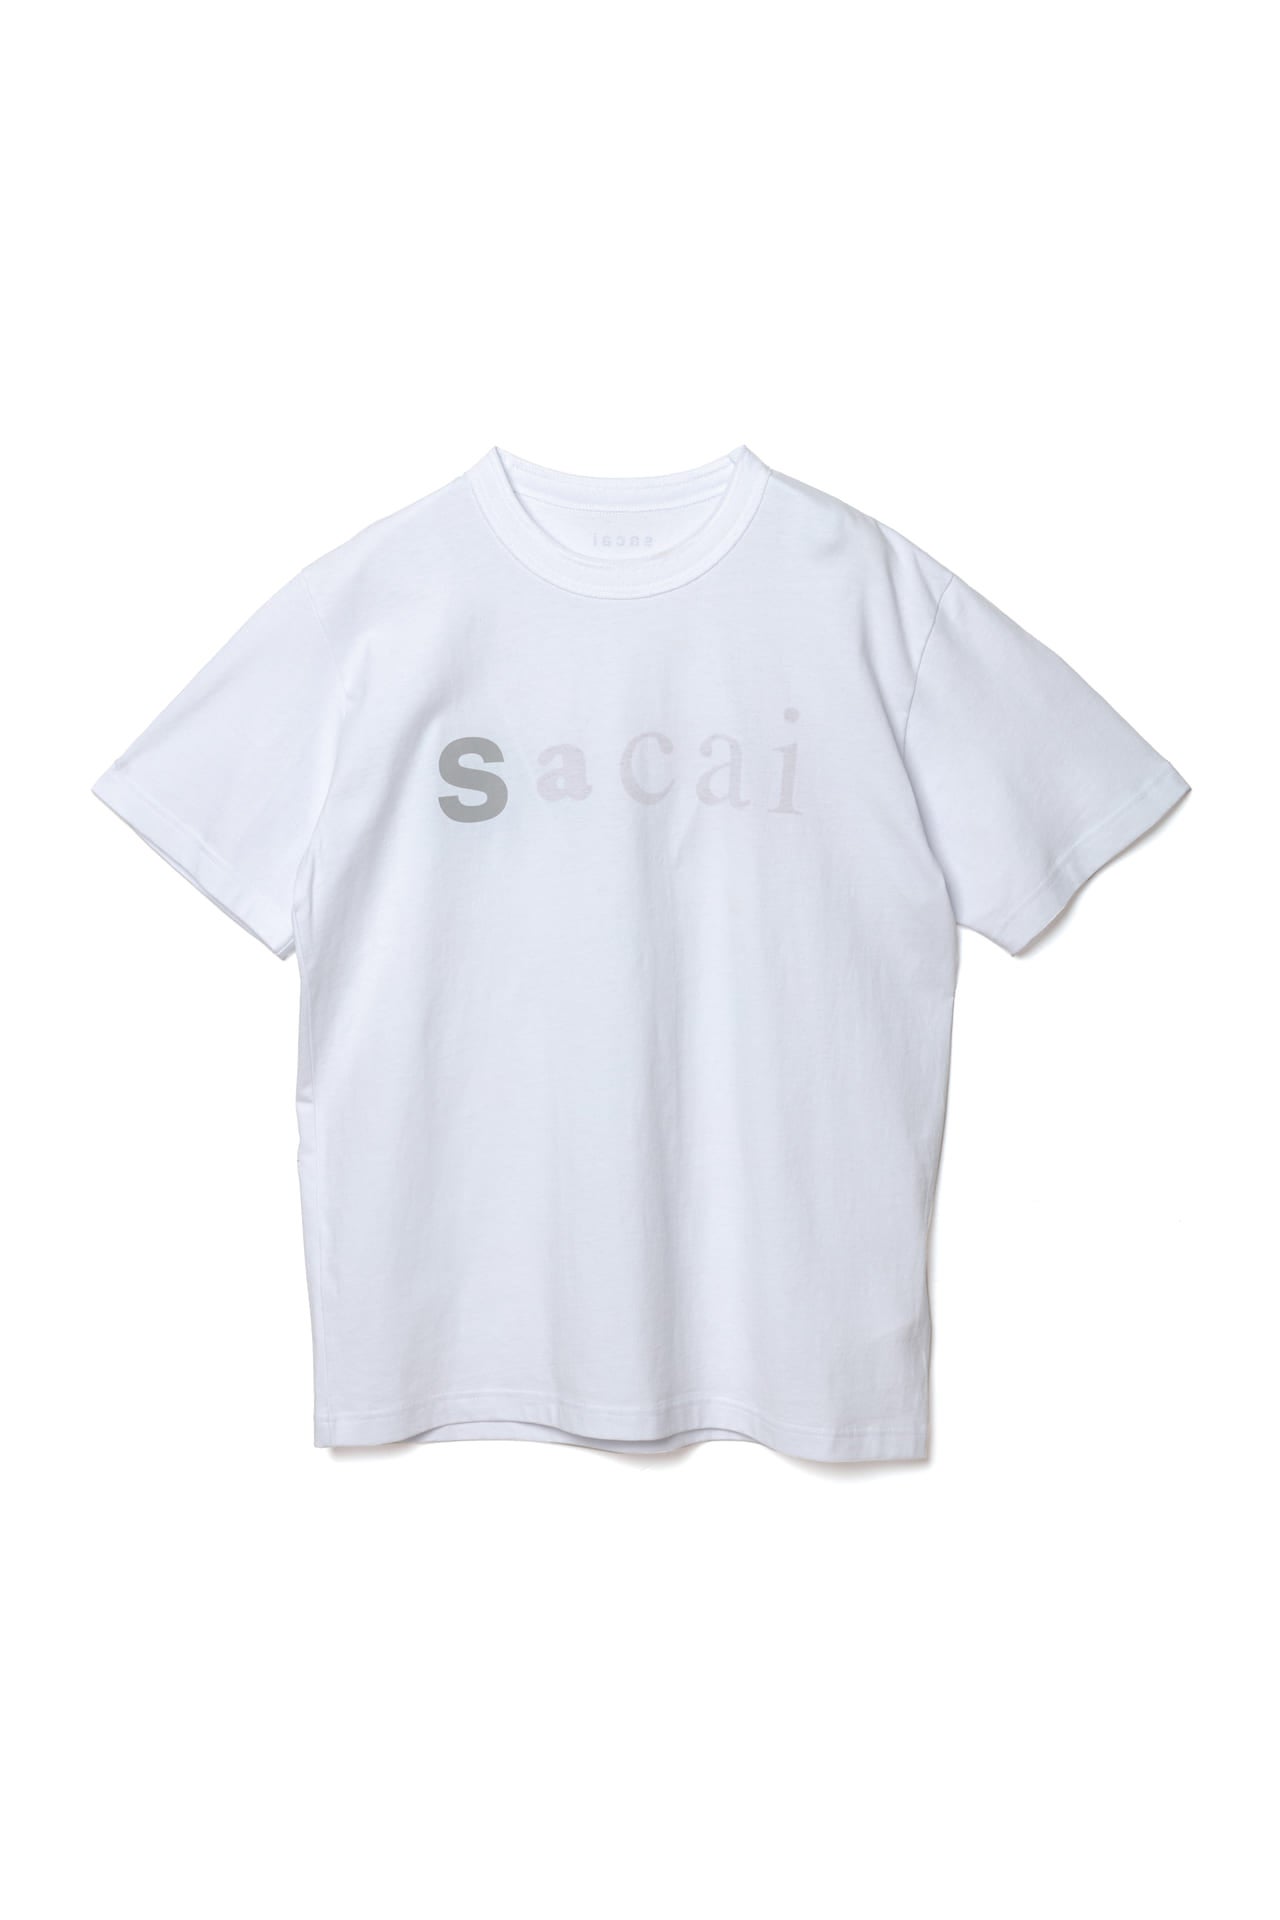 sacai（サカイ）で大人気のロゴTに新色登場。カプセルコレクションには ...